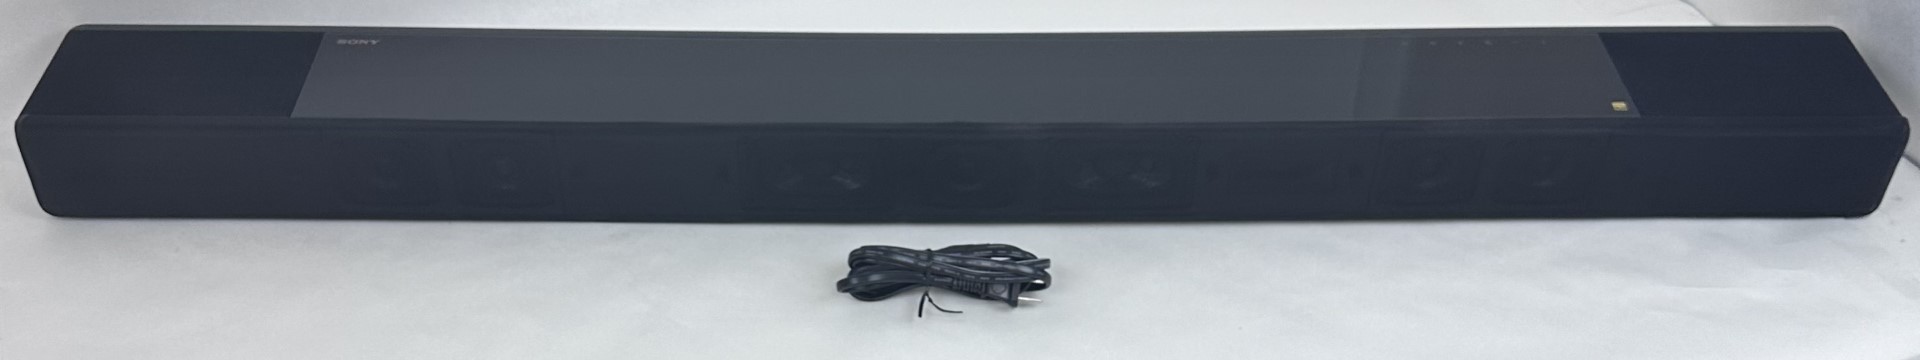 Sony HT-A7000 7.1.2 Channel Soundbar with Dolby Atmos - 4219 U